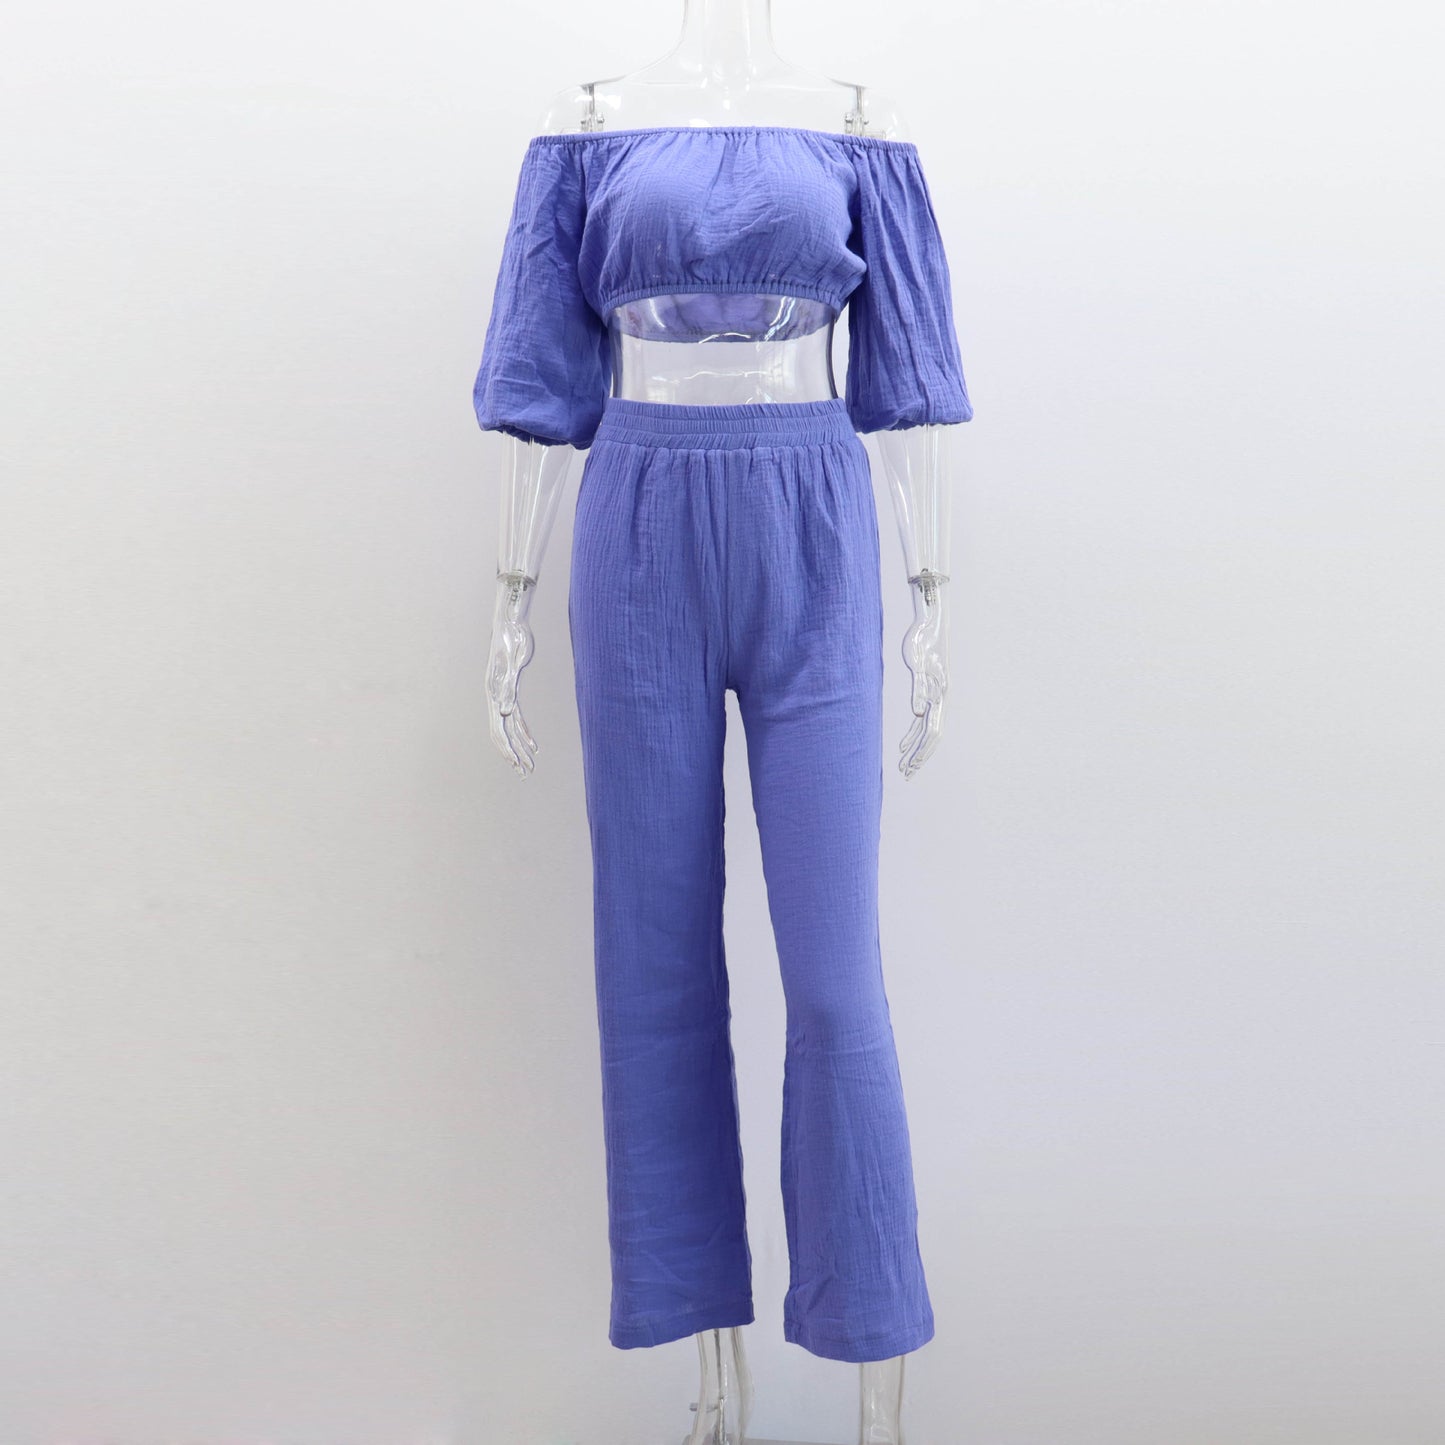 Pants set- Women's Cotton Vacation Outfit Set - Crop Top & Pants- Dark Blue- Chuzko Women Clothing